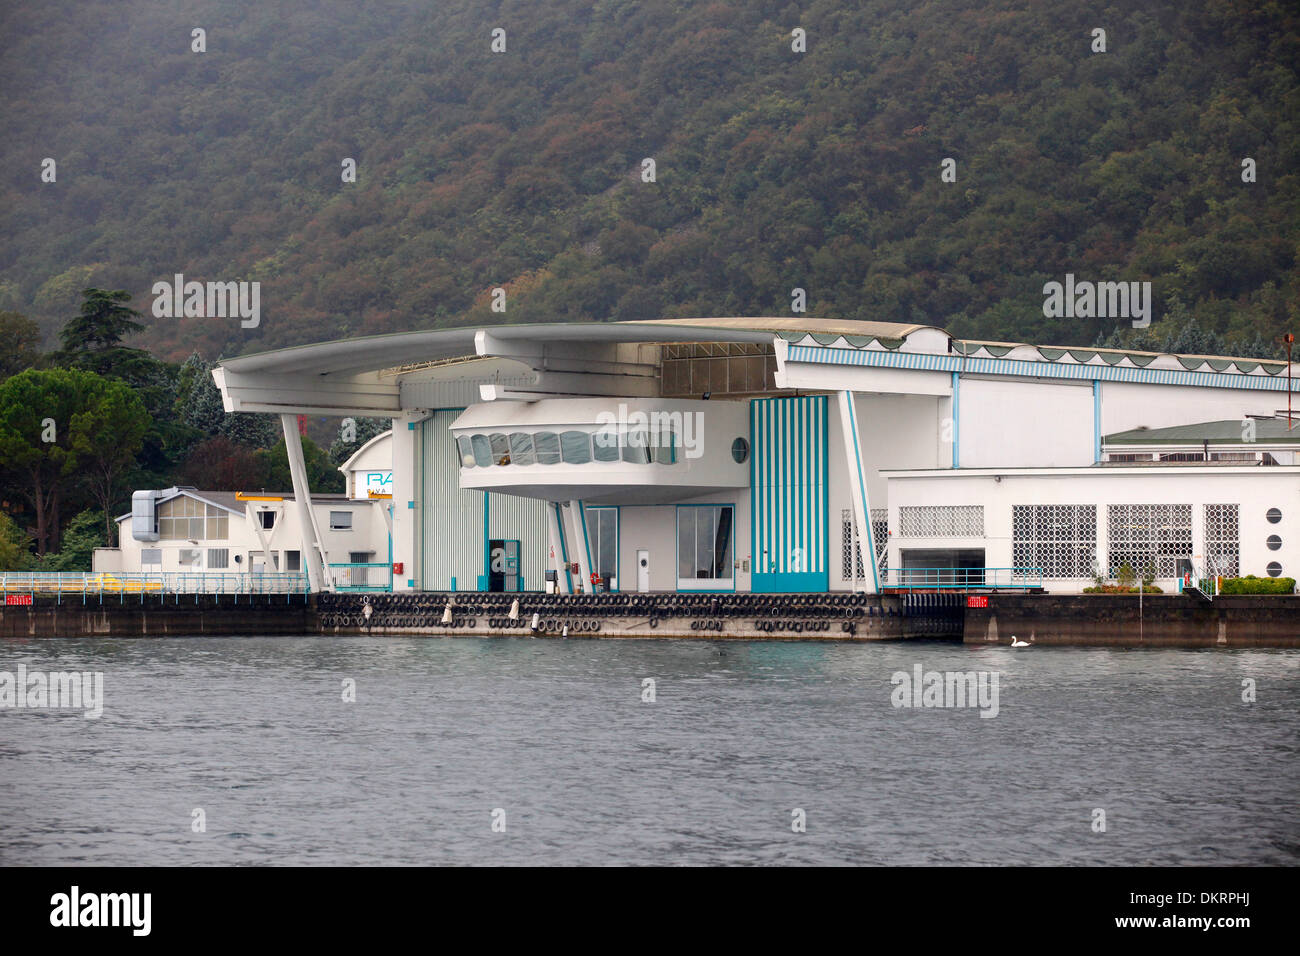 Il Riva yacht fabbrica sul lago d'Iseo, Sarnico, Italia Foto stock - Alamy